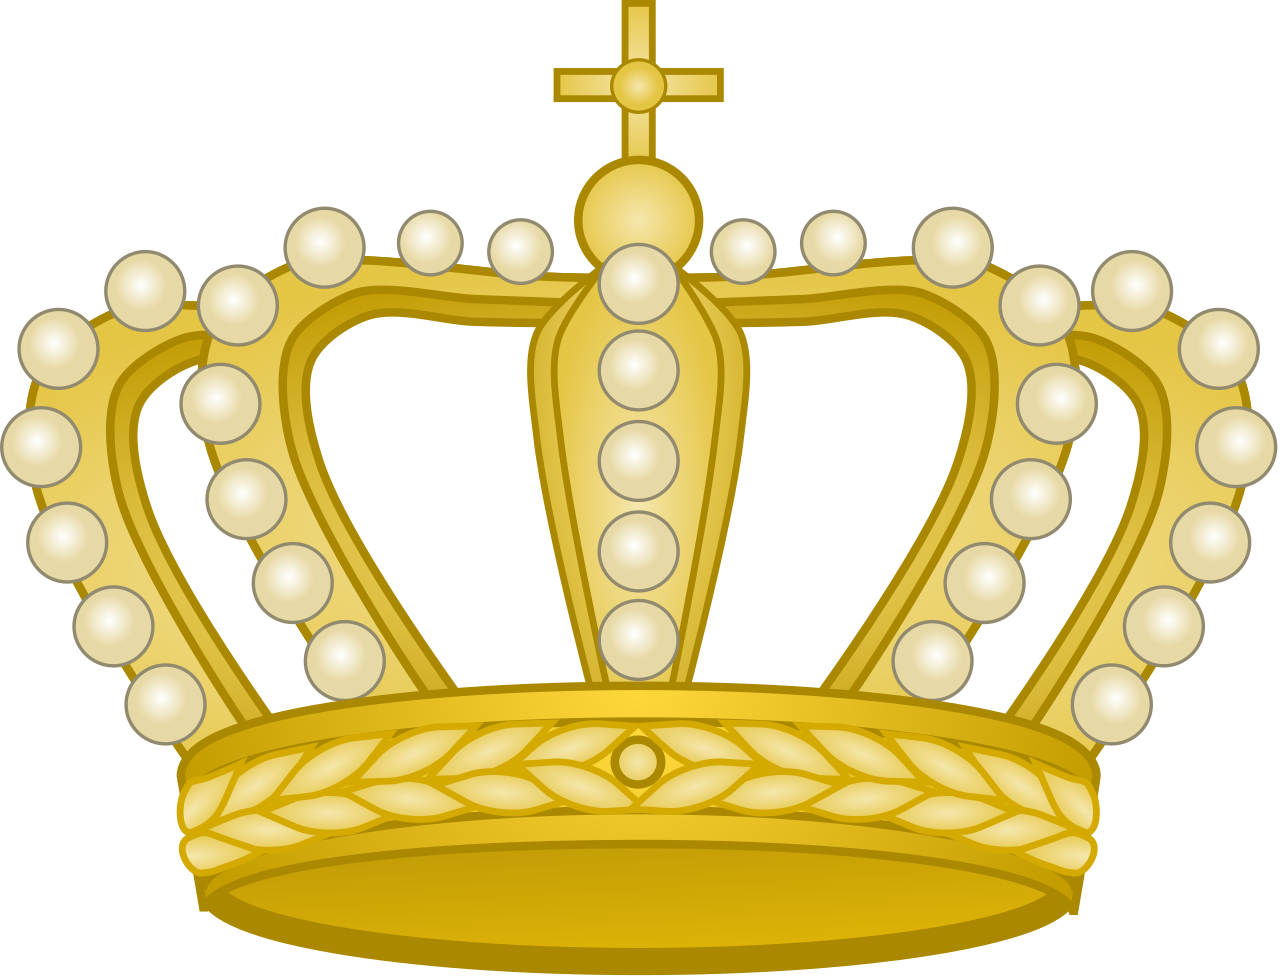 Crown Of The Napoleonic Kingdom Of Italy - Napoleonic Crown Vector (1280x980)